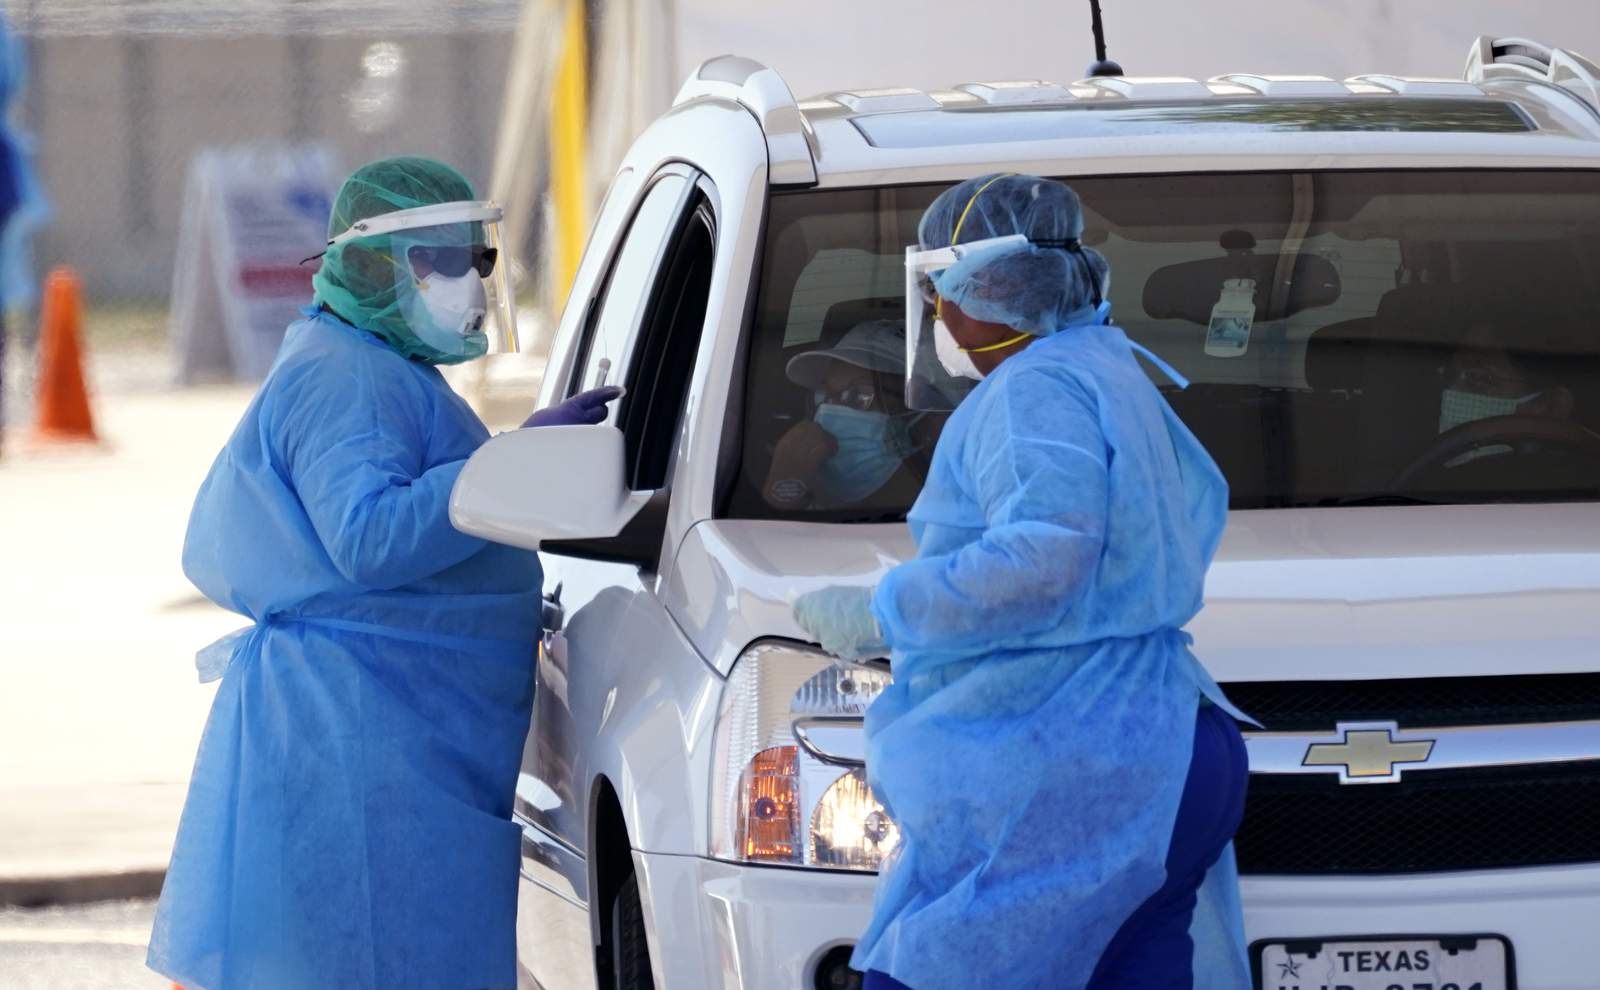 Coronavirus update San Antonio, Nov. 29: Leaders report 888 new COVID-19 cases, no new deaths - KSAT San Antonio